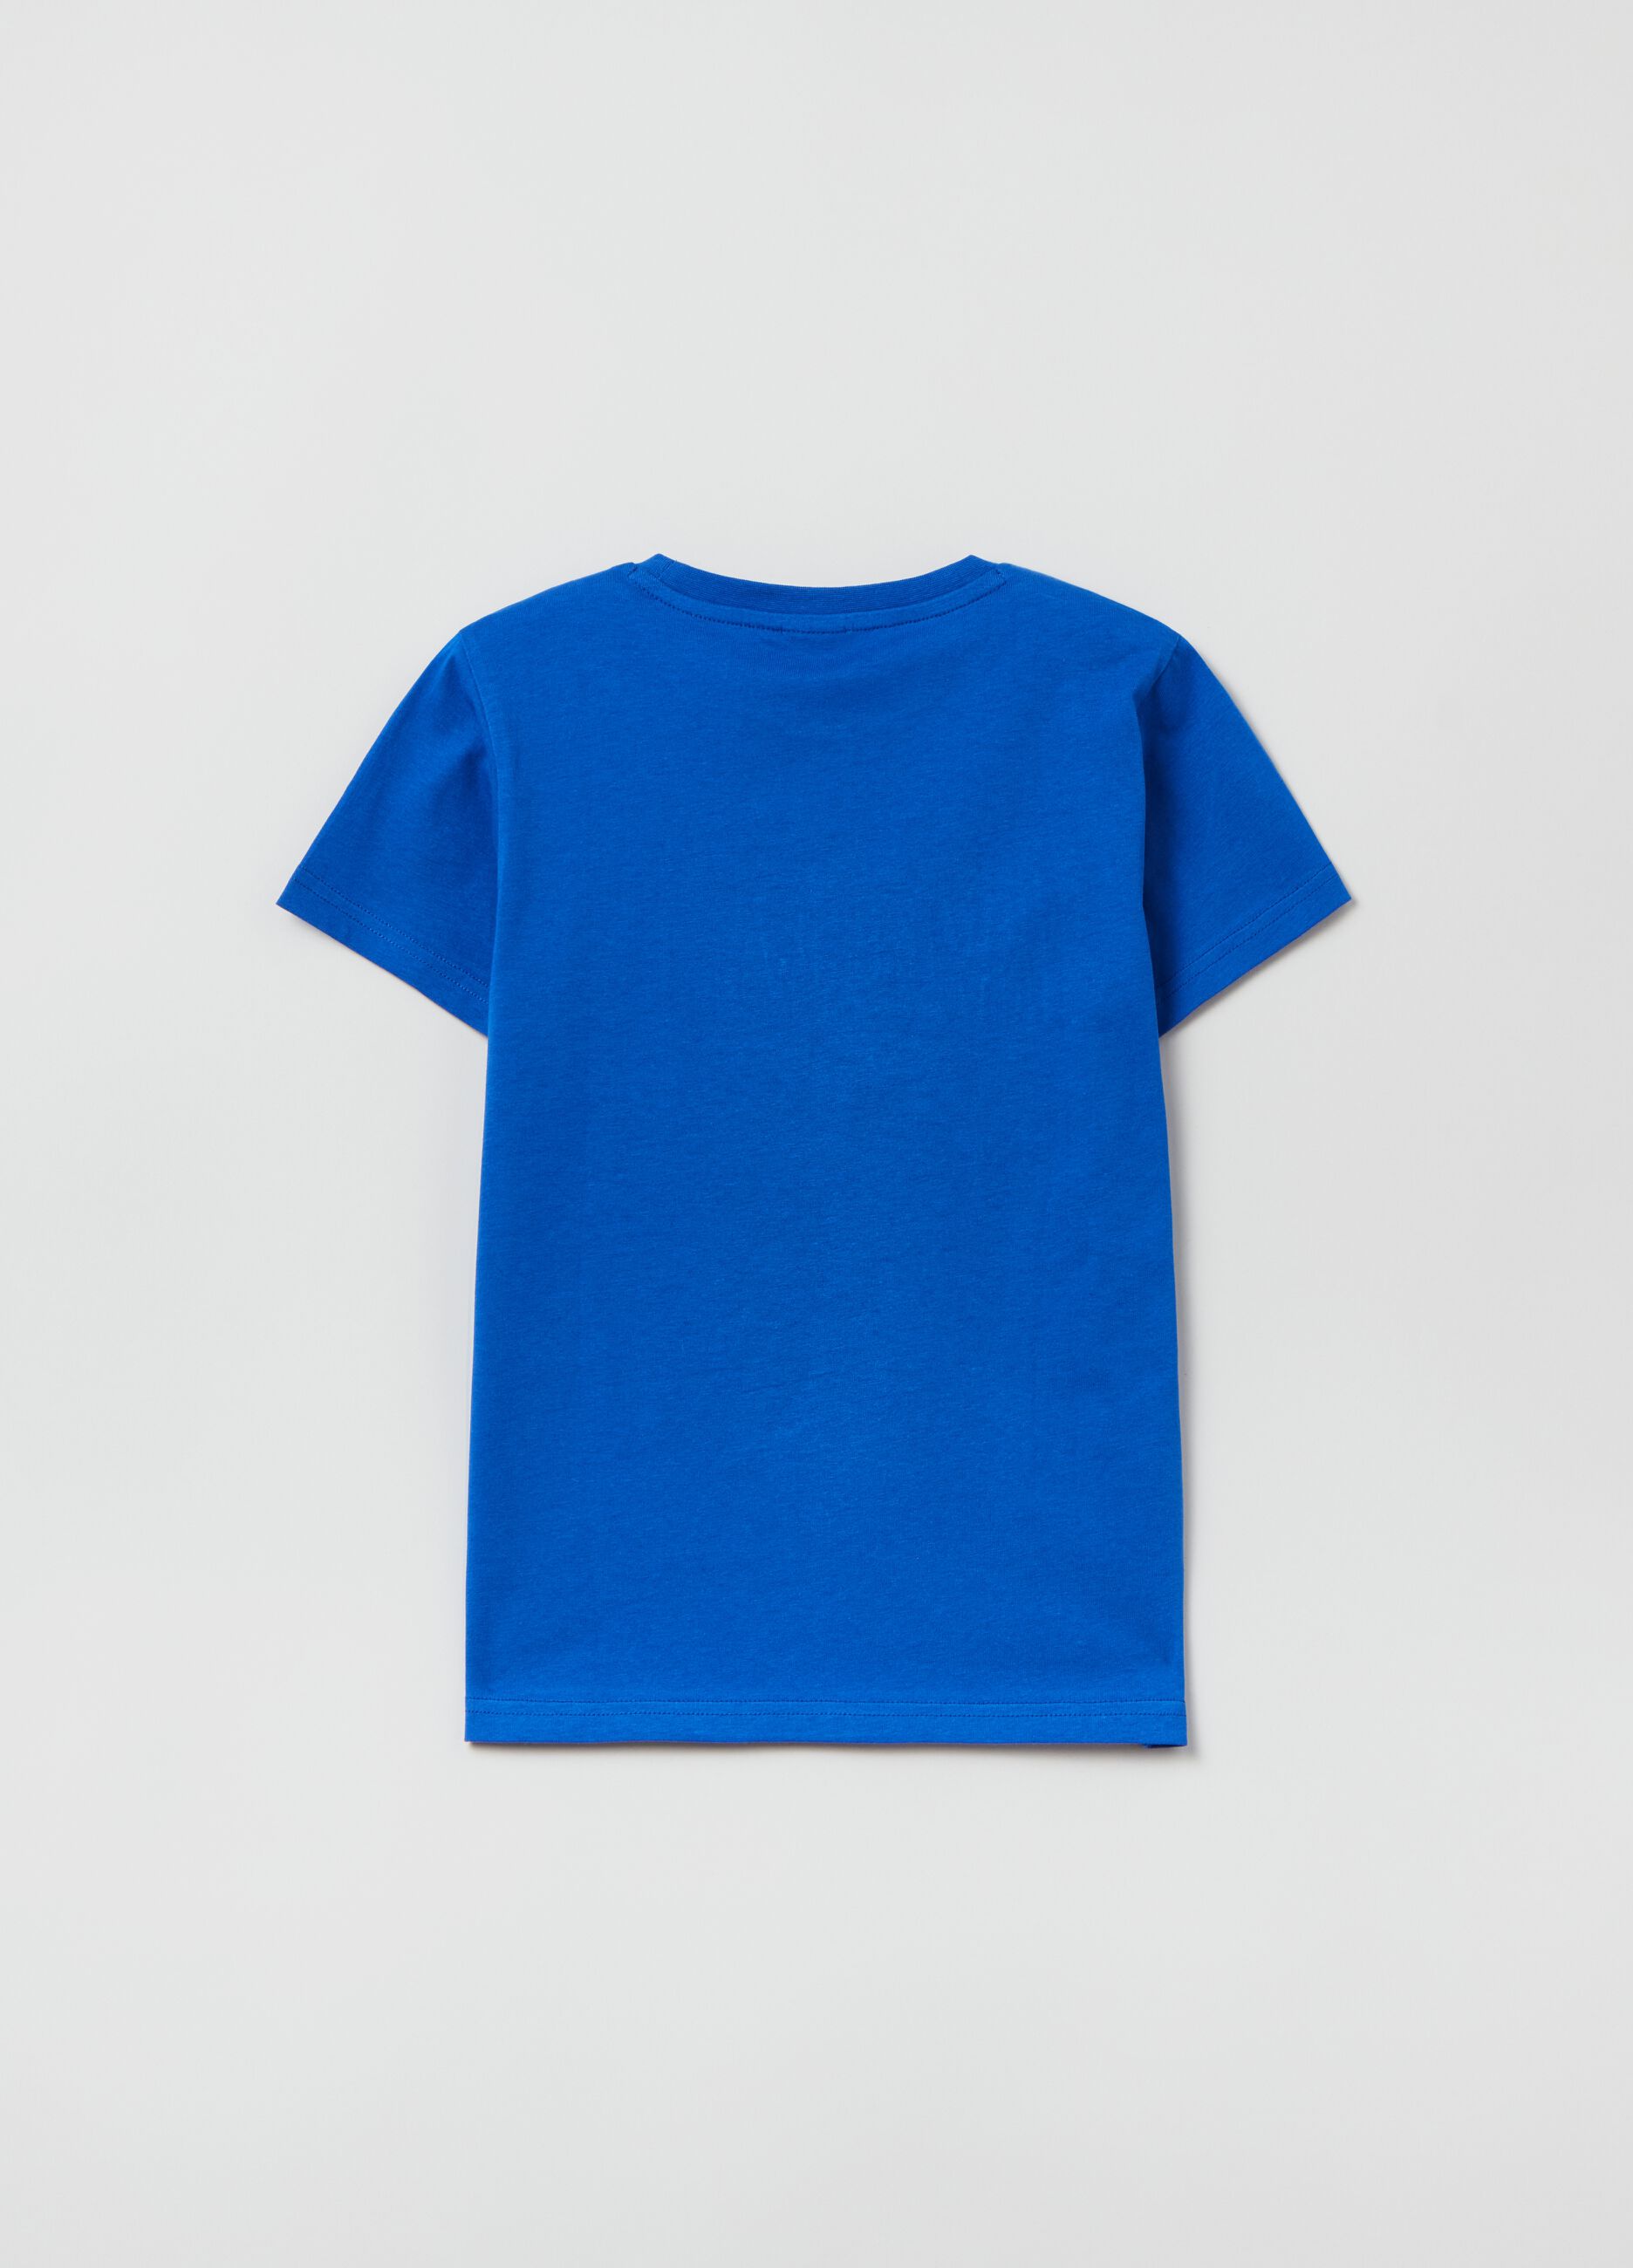 Everlast cotton T-shirt